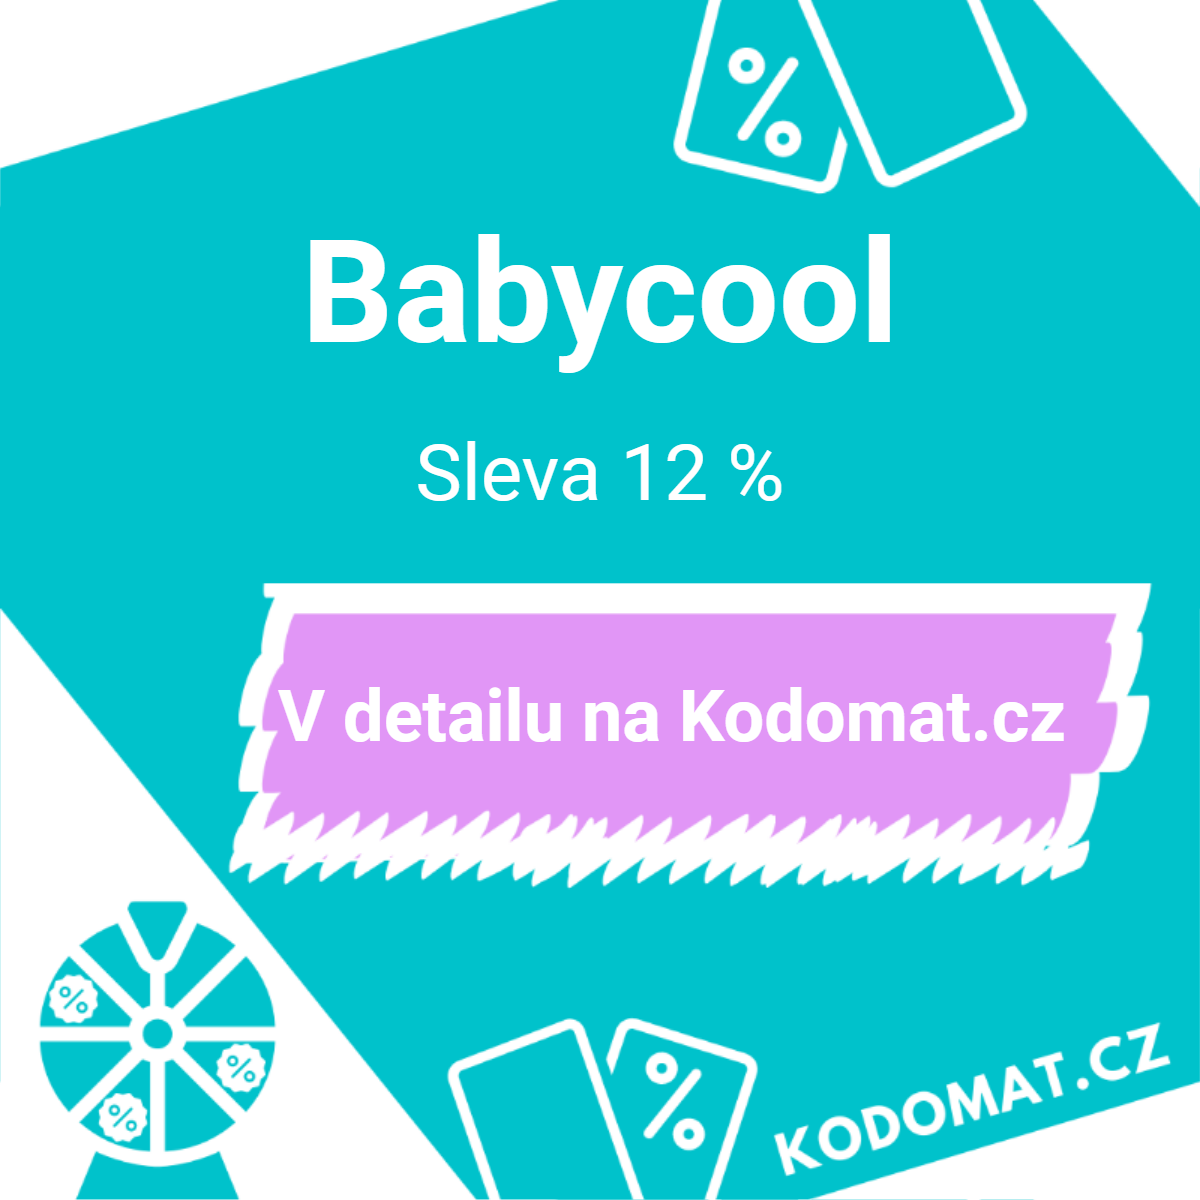 Babycool slevový kód: Sleva 12 %